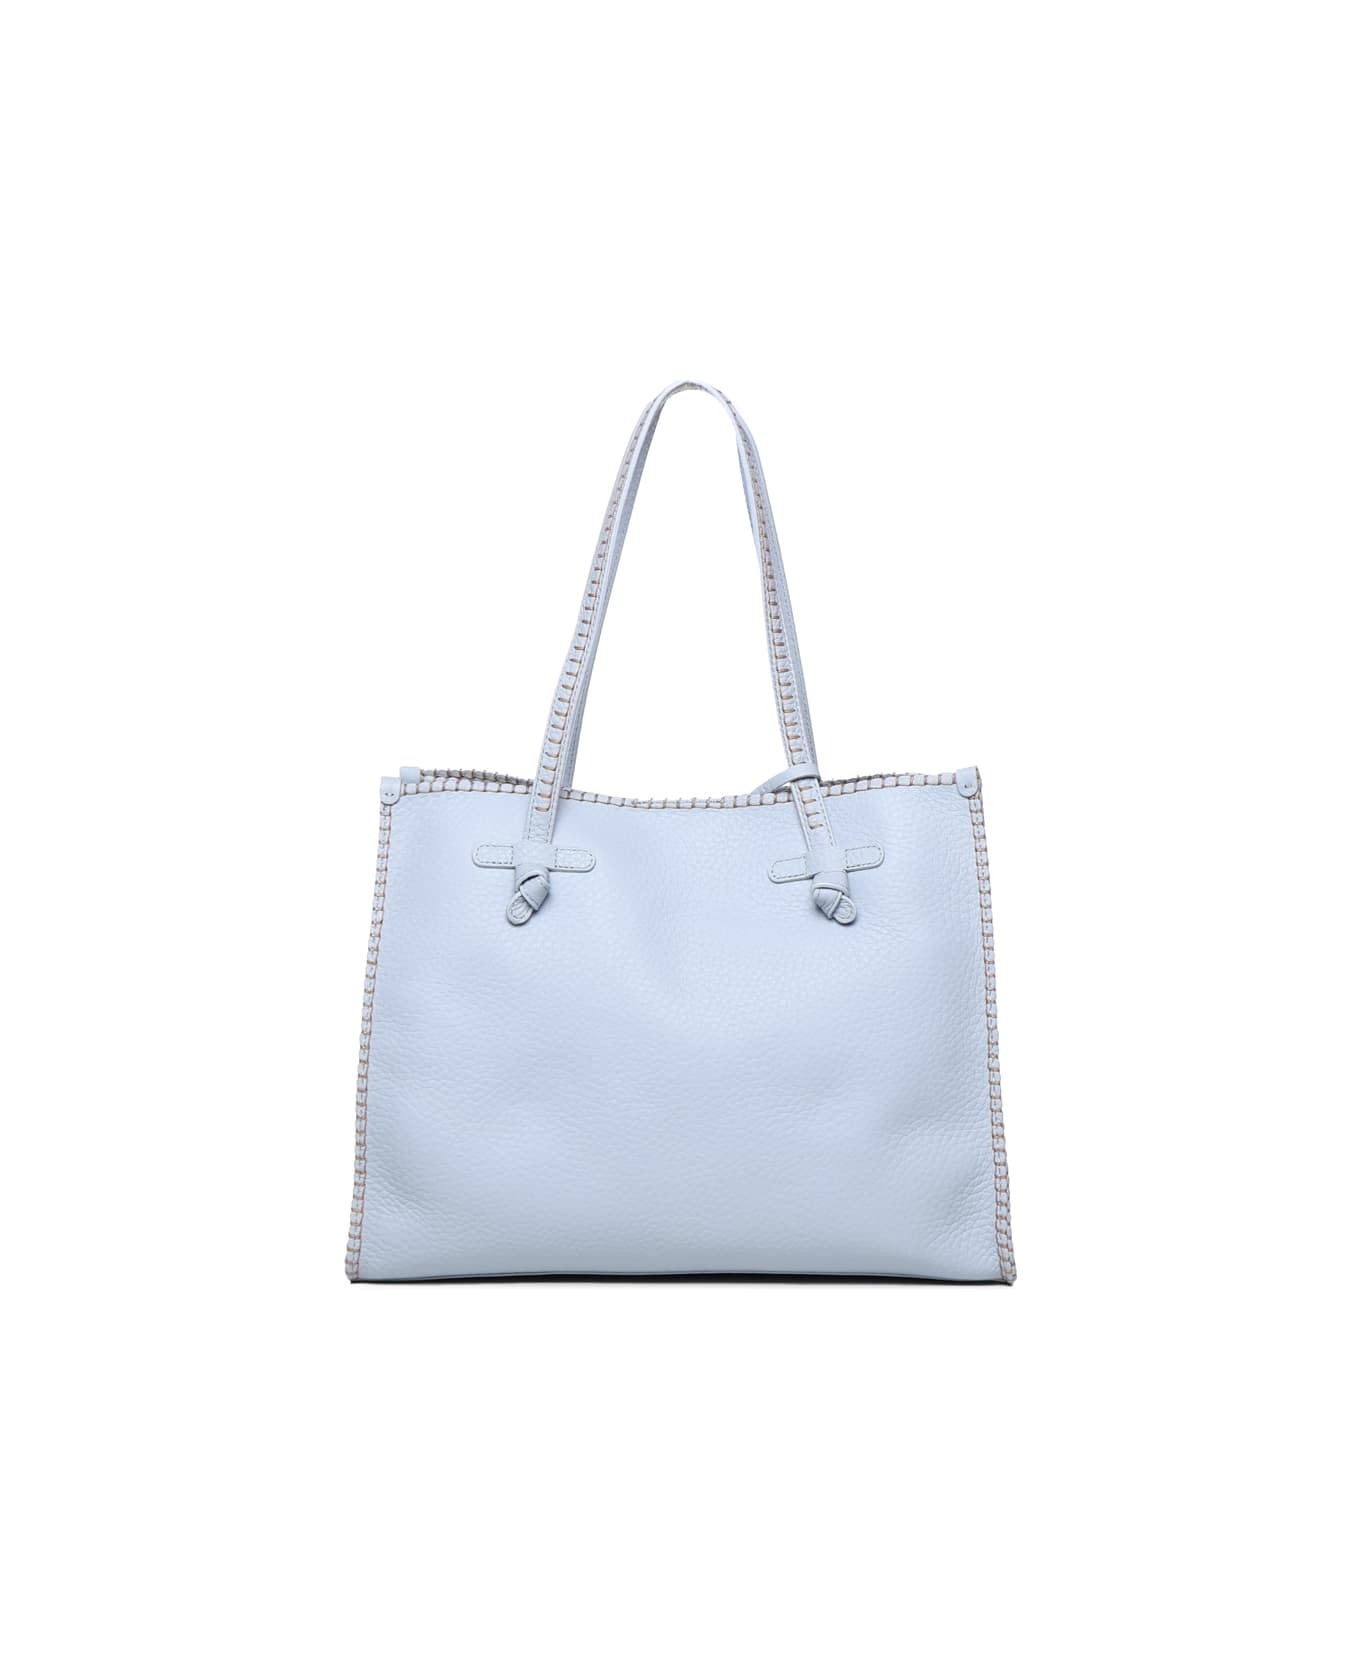 Gianni Chiarini Marcella Shopping Bag In Leather - Light blue